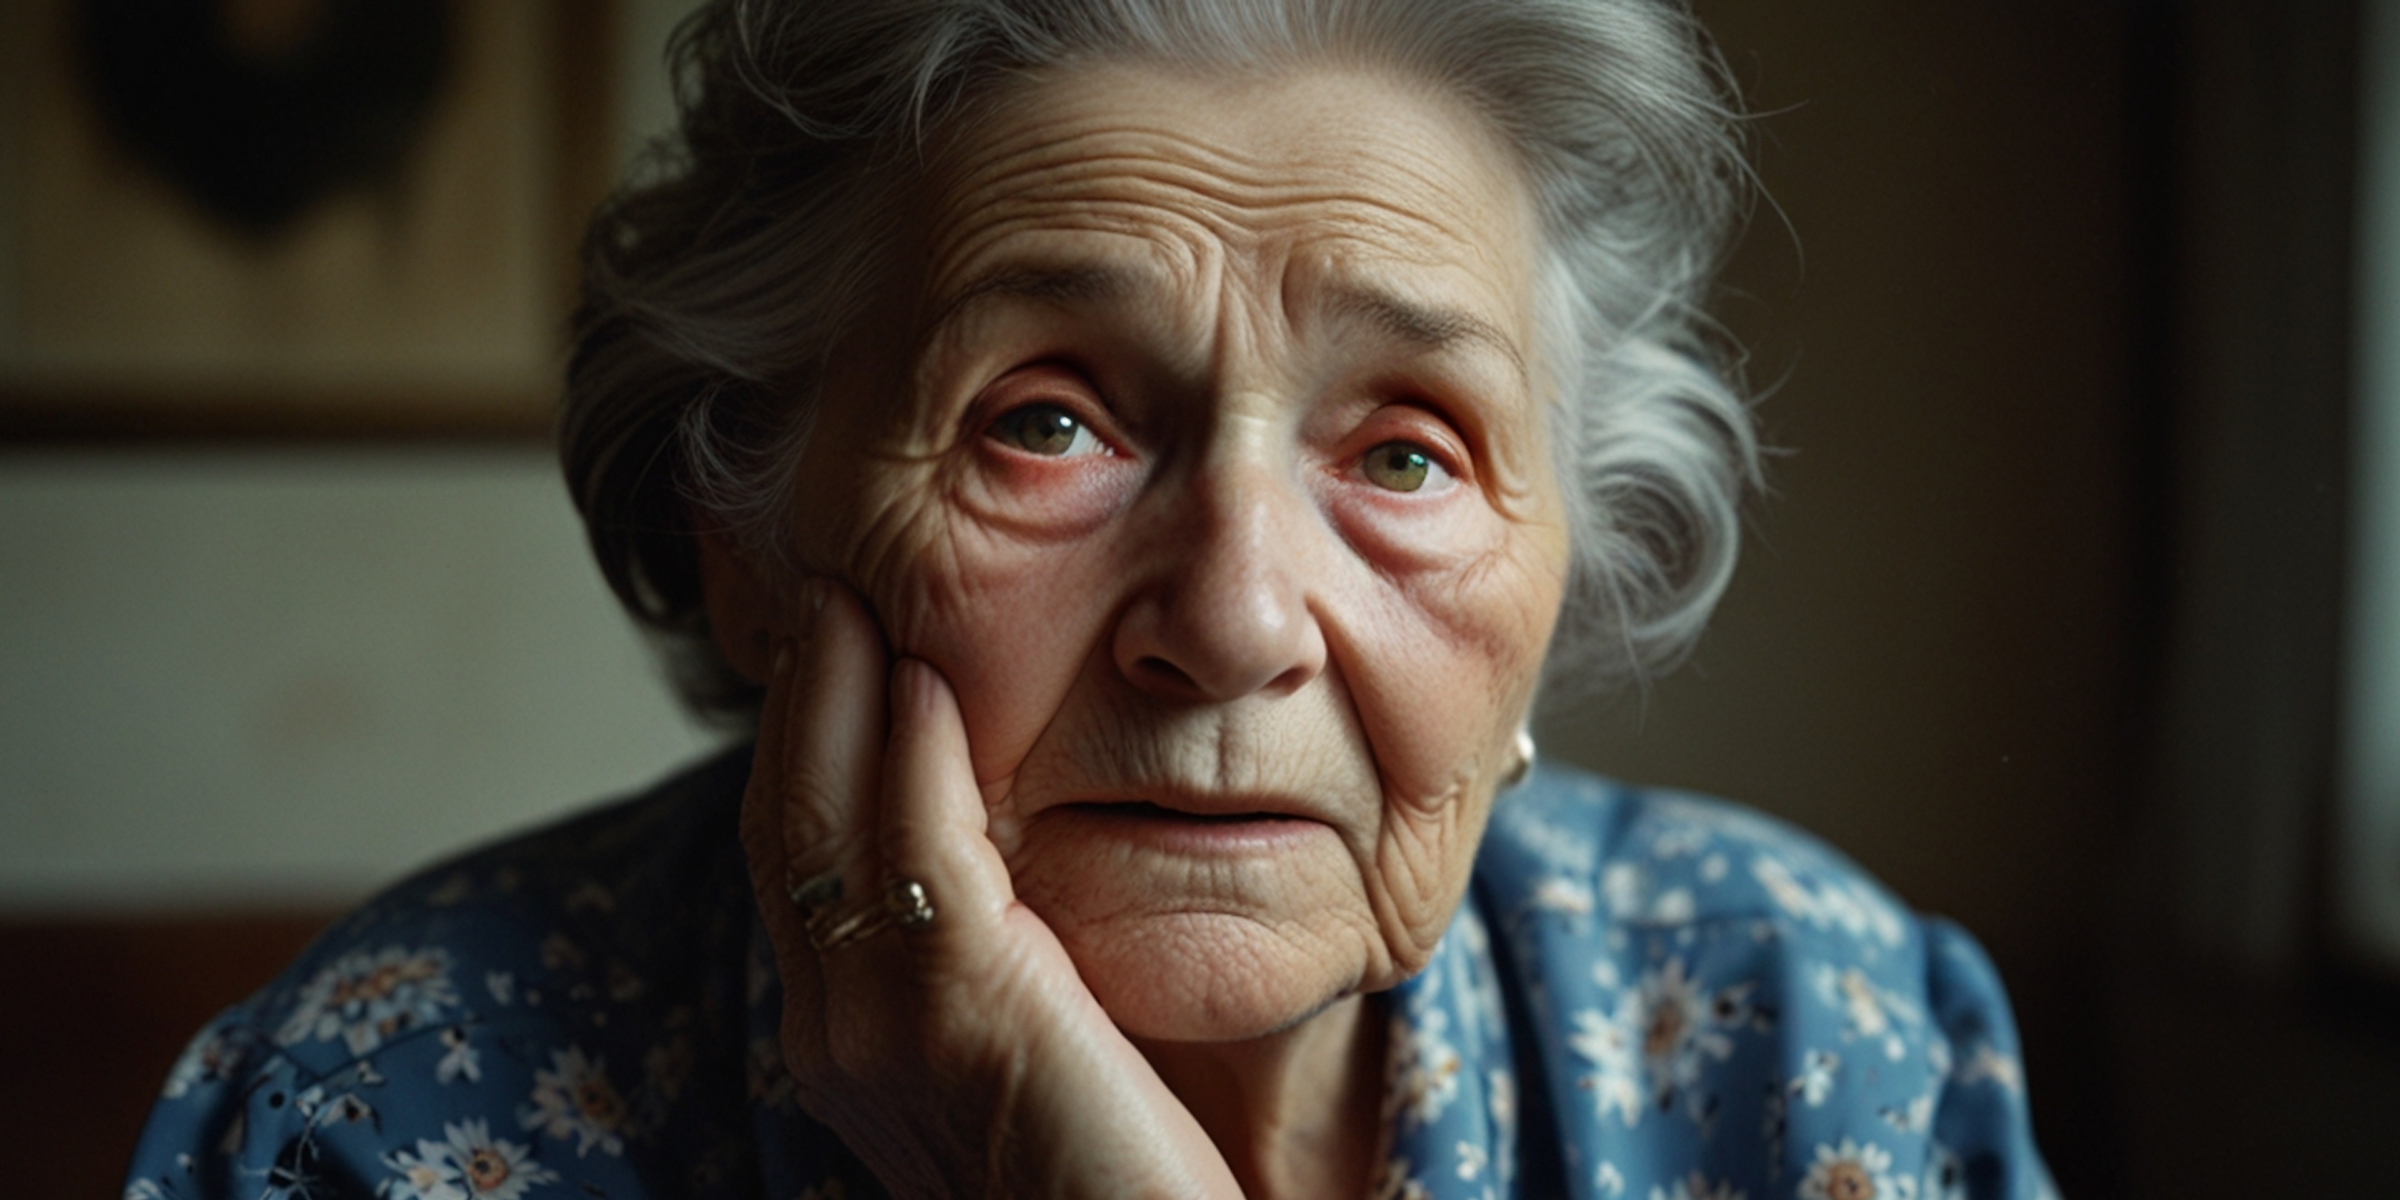 An elderly woman looking pensive | Source: Amomama